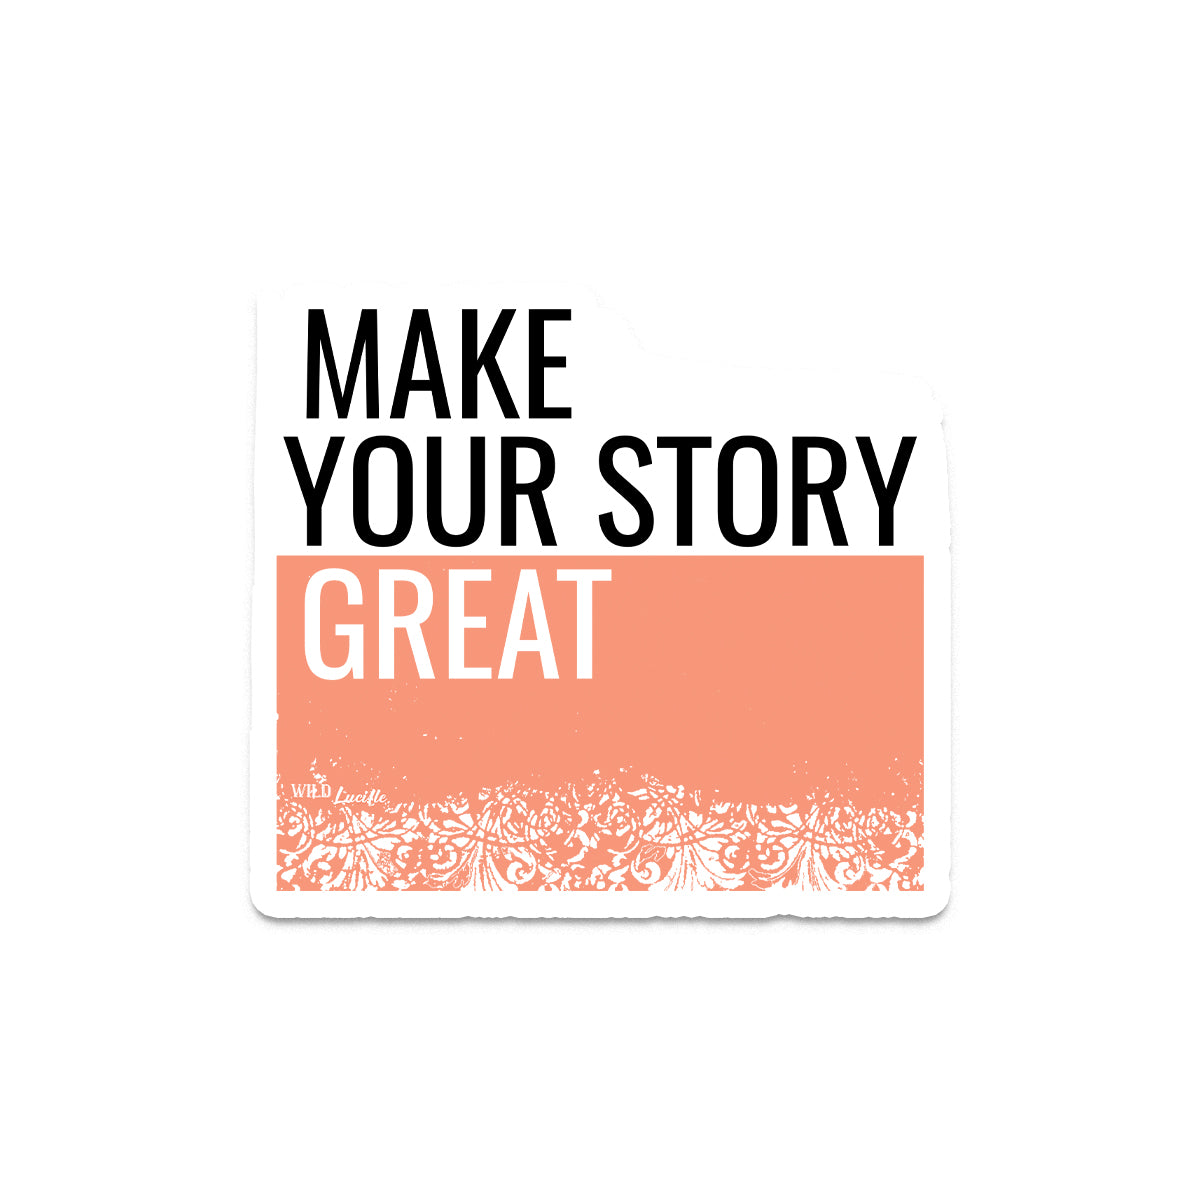 Make Your Story Great - Vinyl Sticker Decals